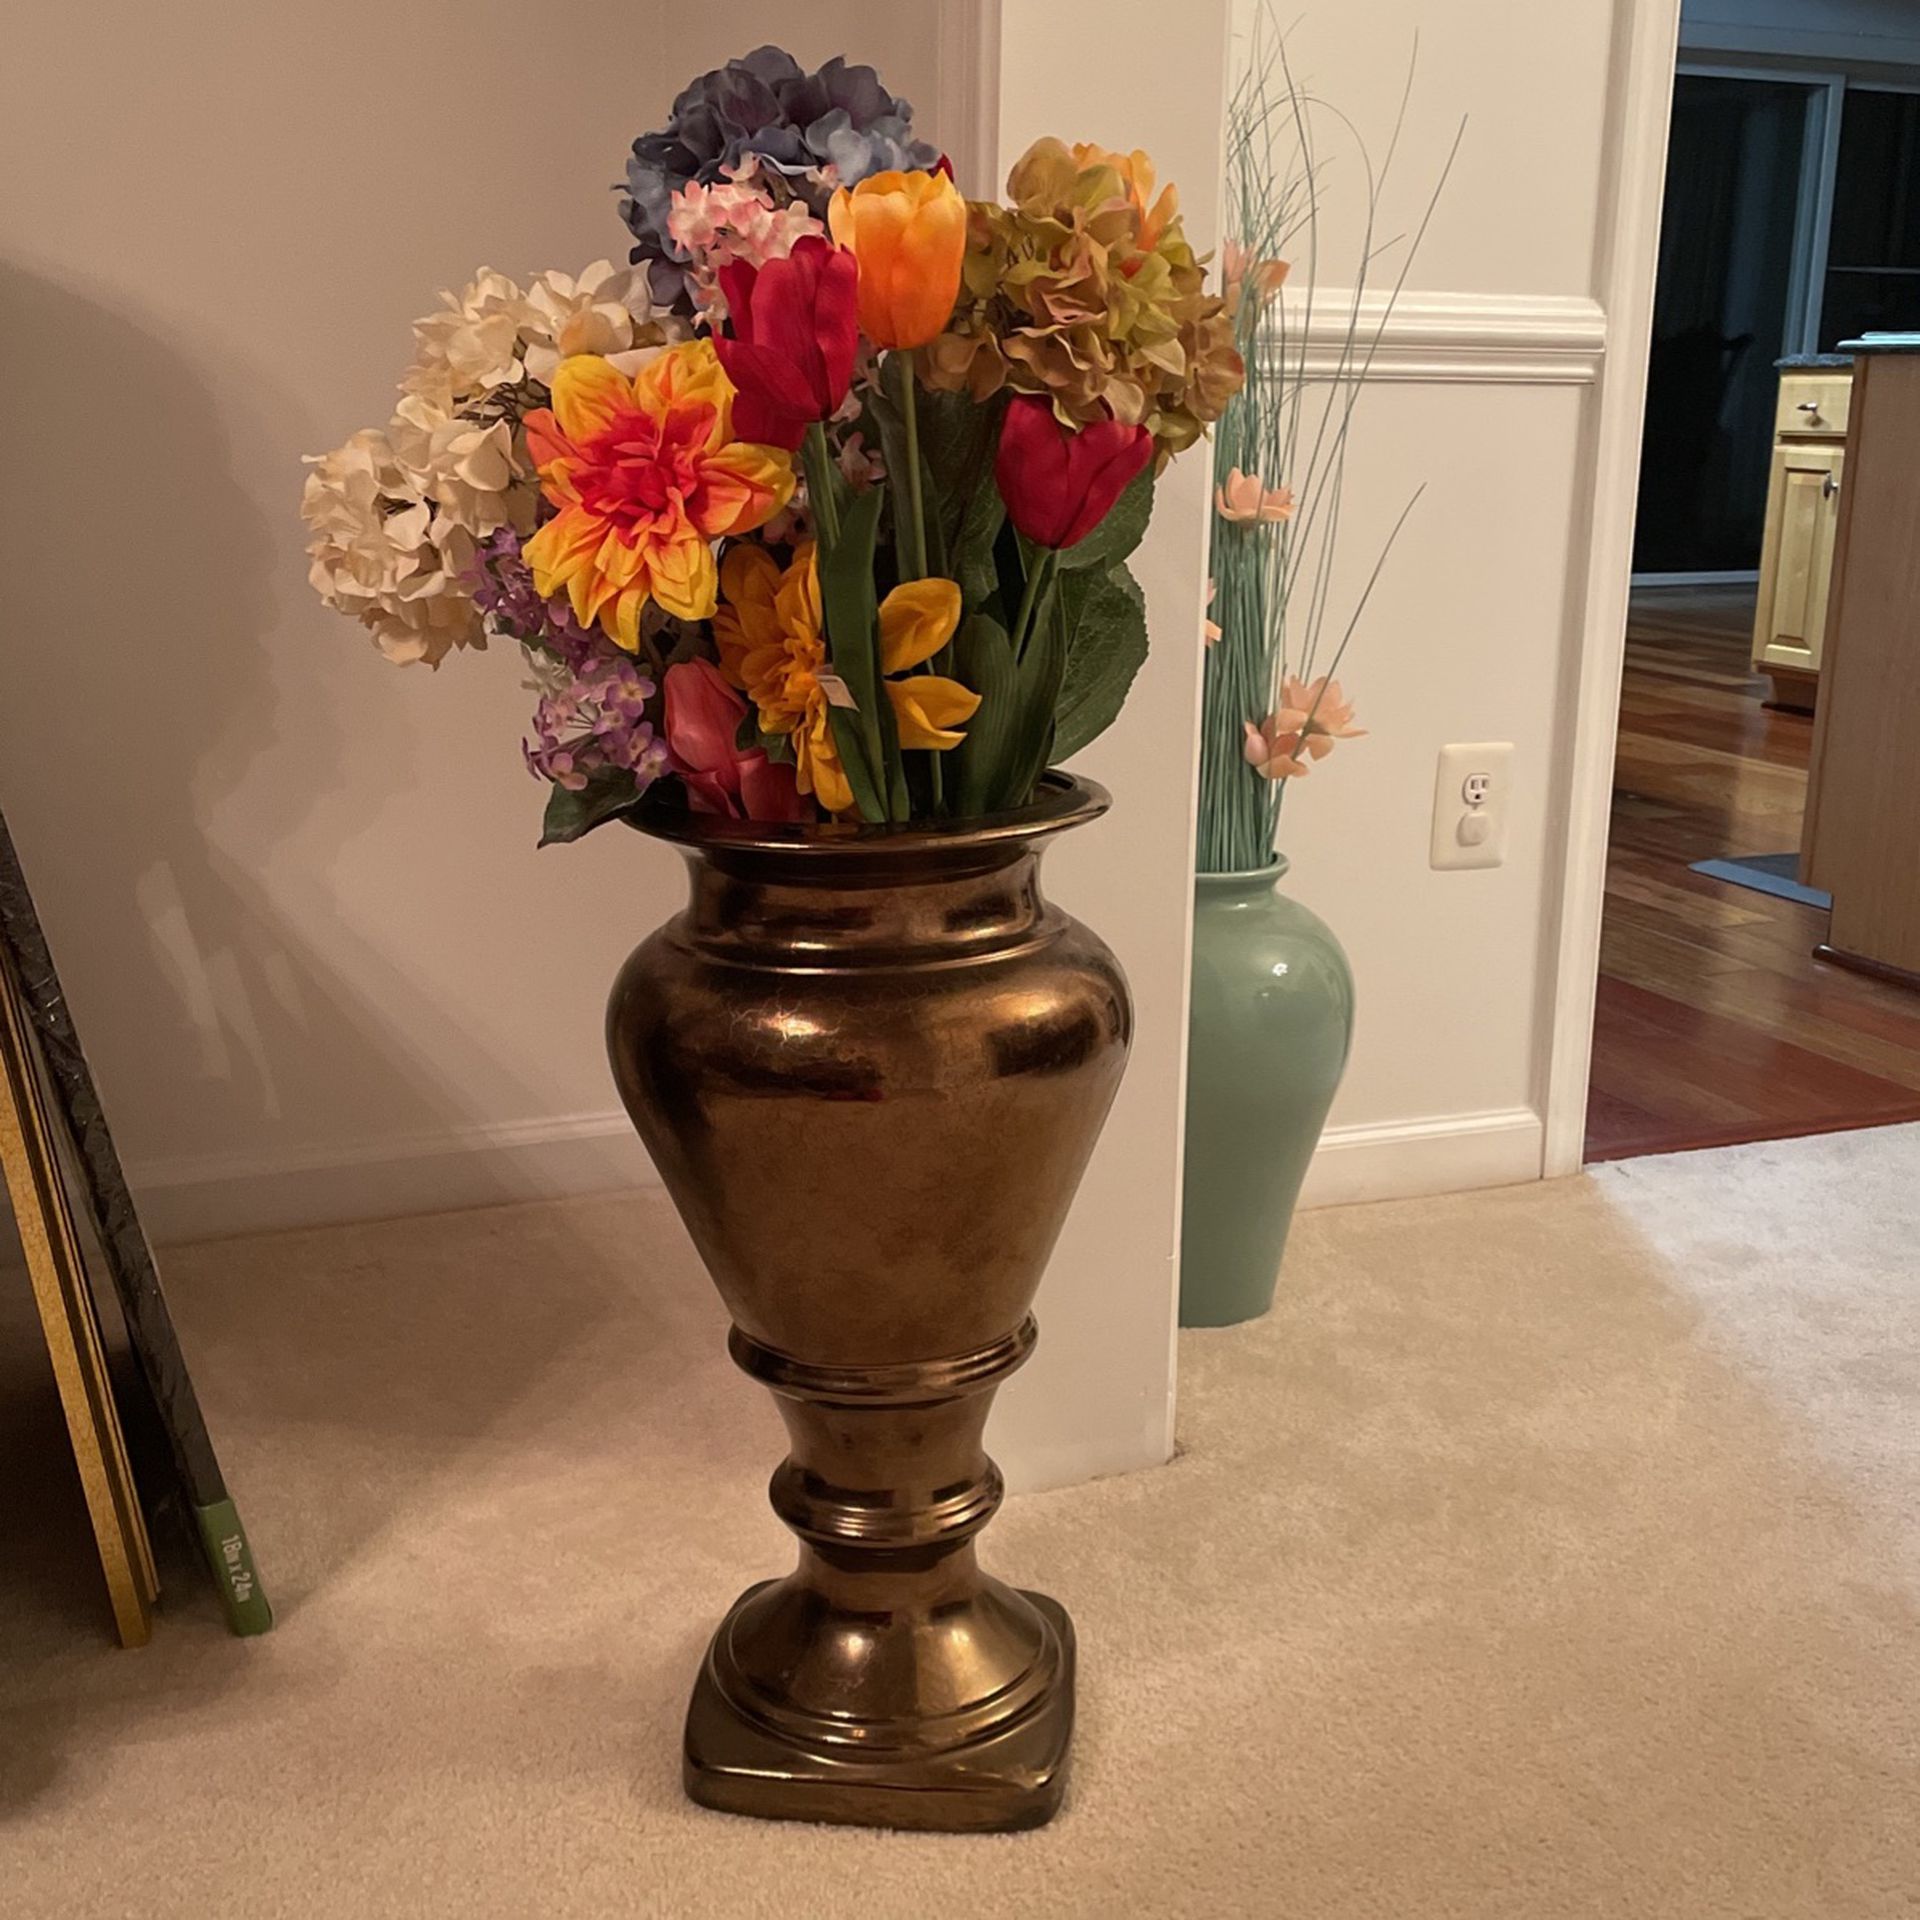 Big Vase With Flowers